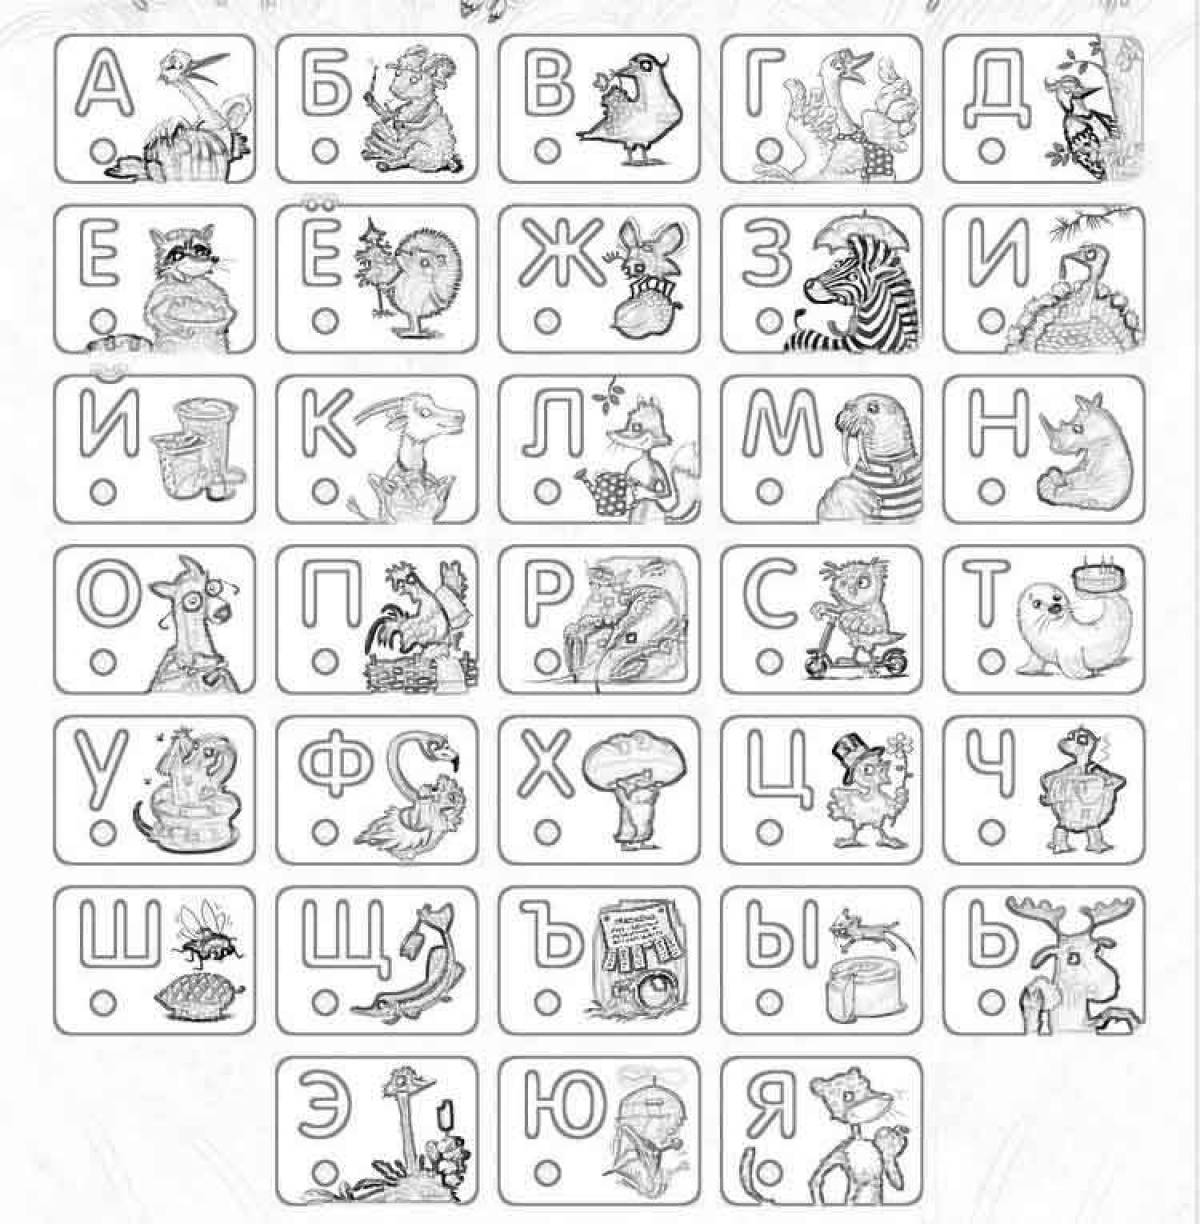 Laura's joyful alphabet coloring page